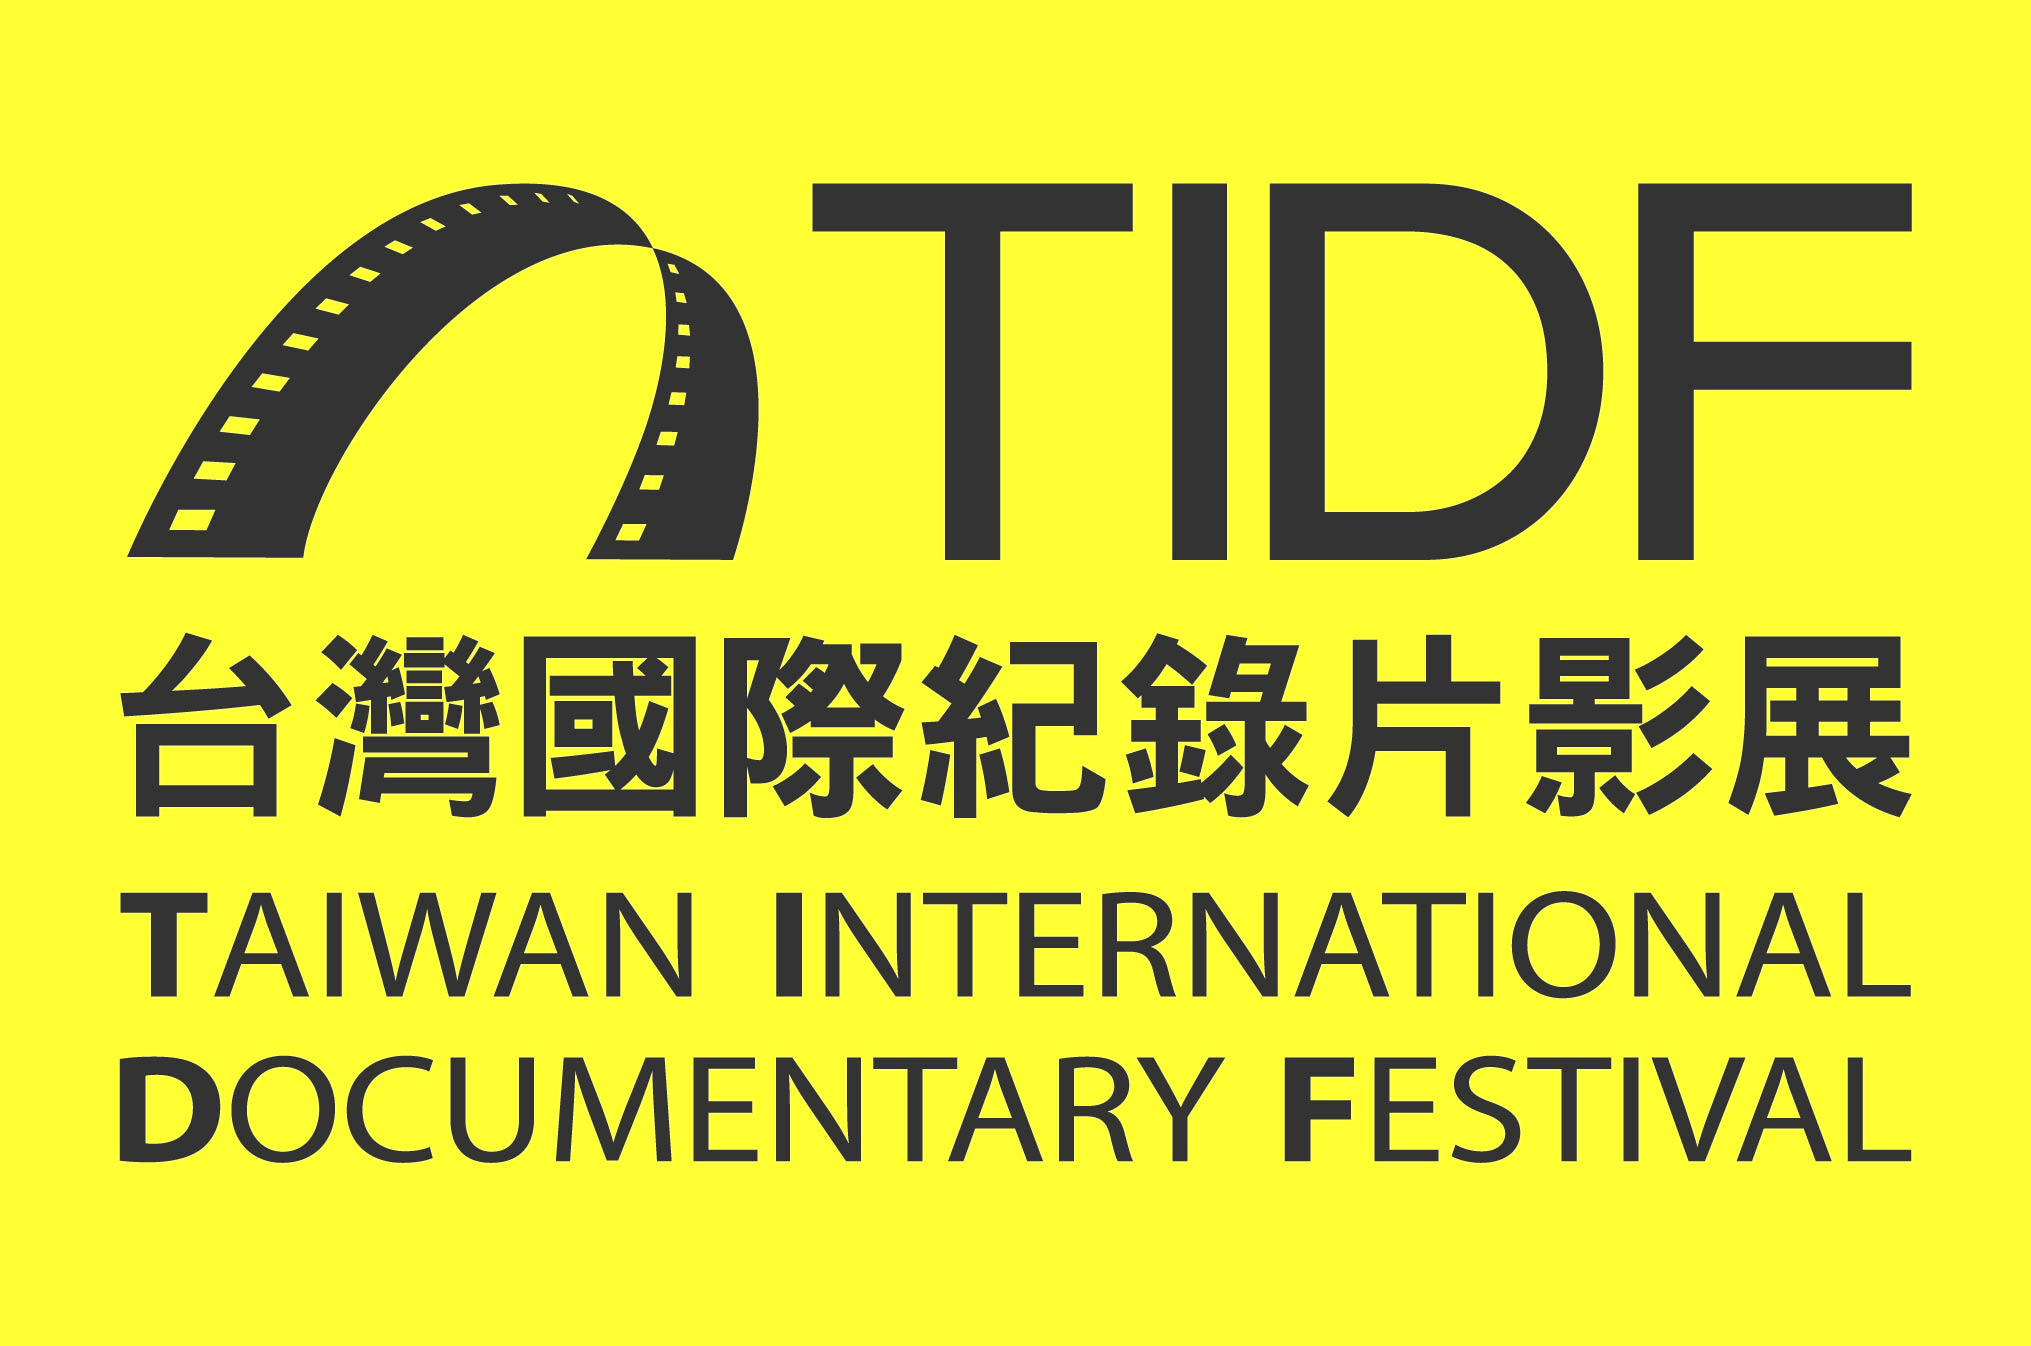 Taiwan International Documentary Festival